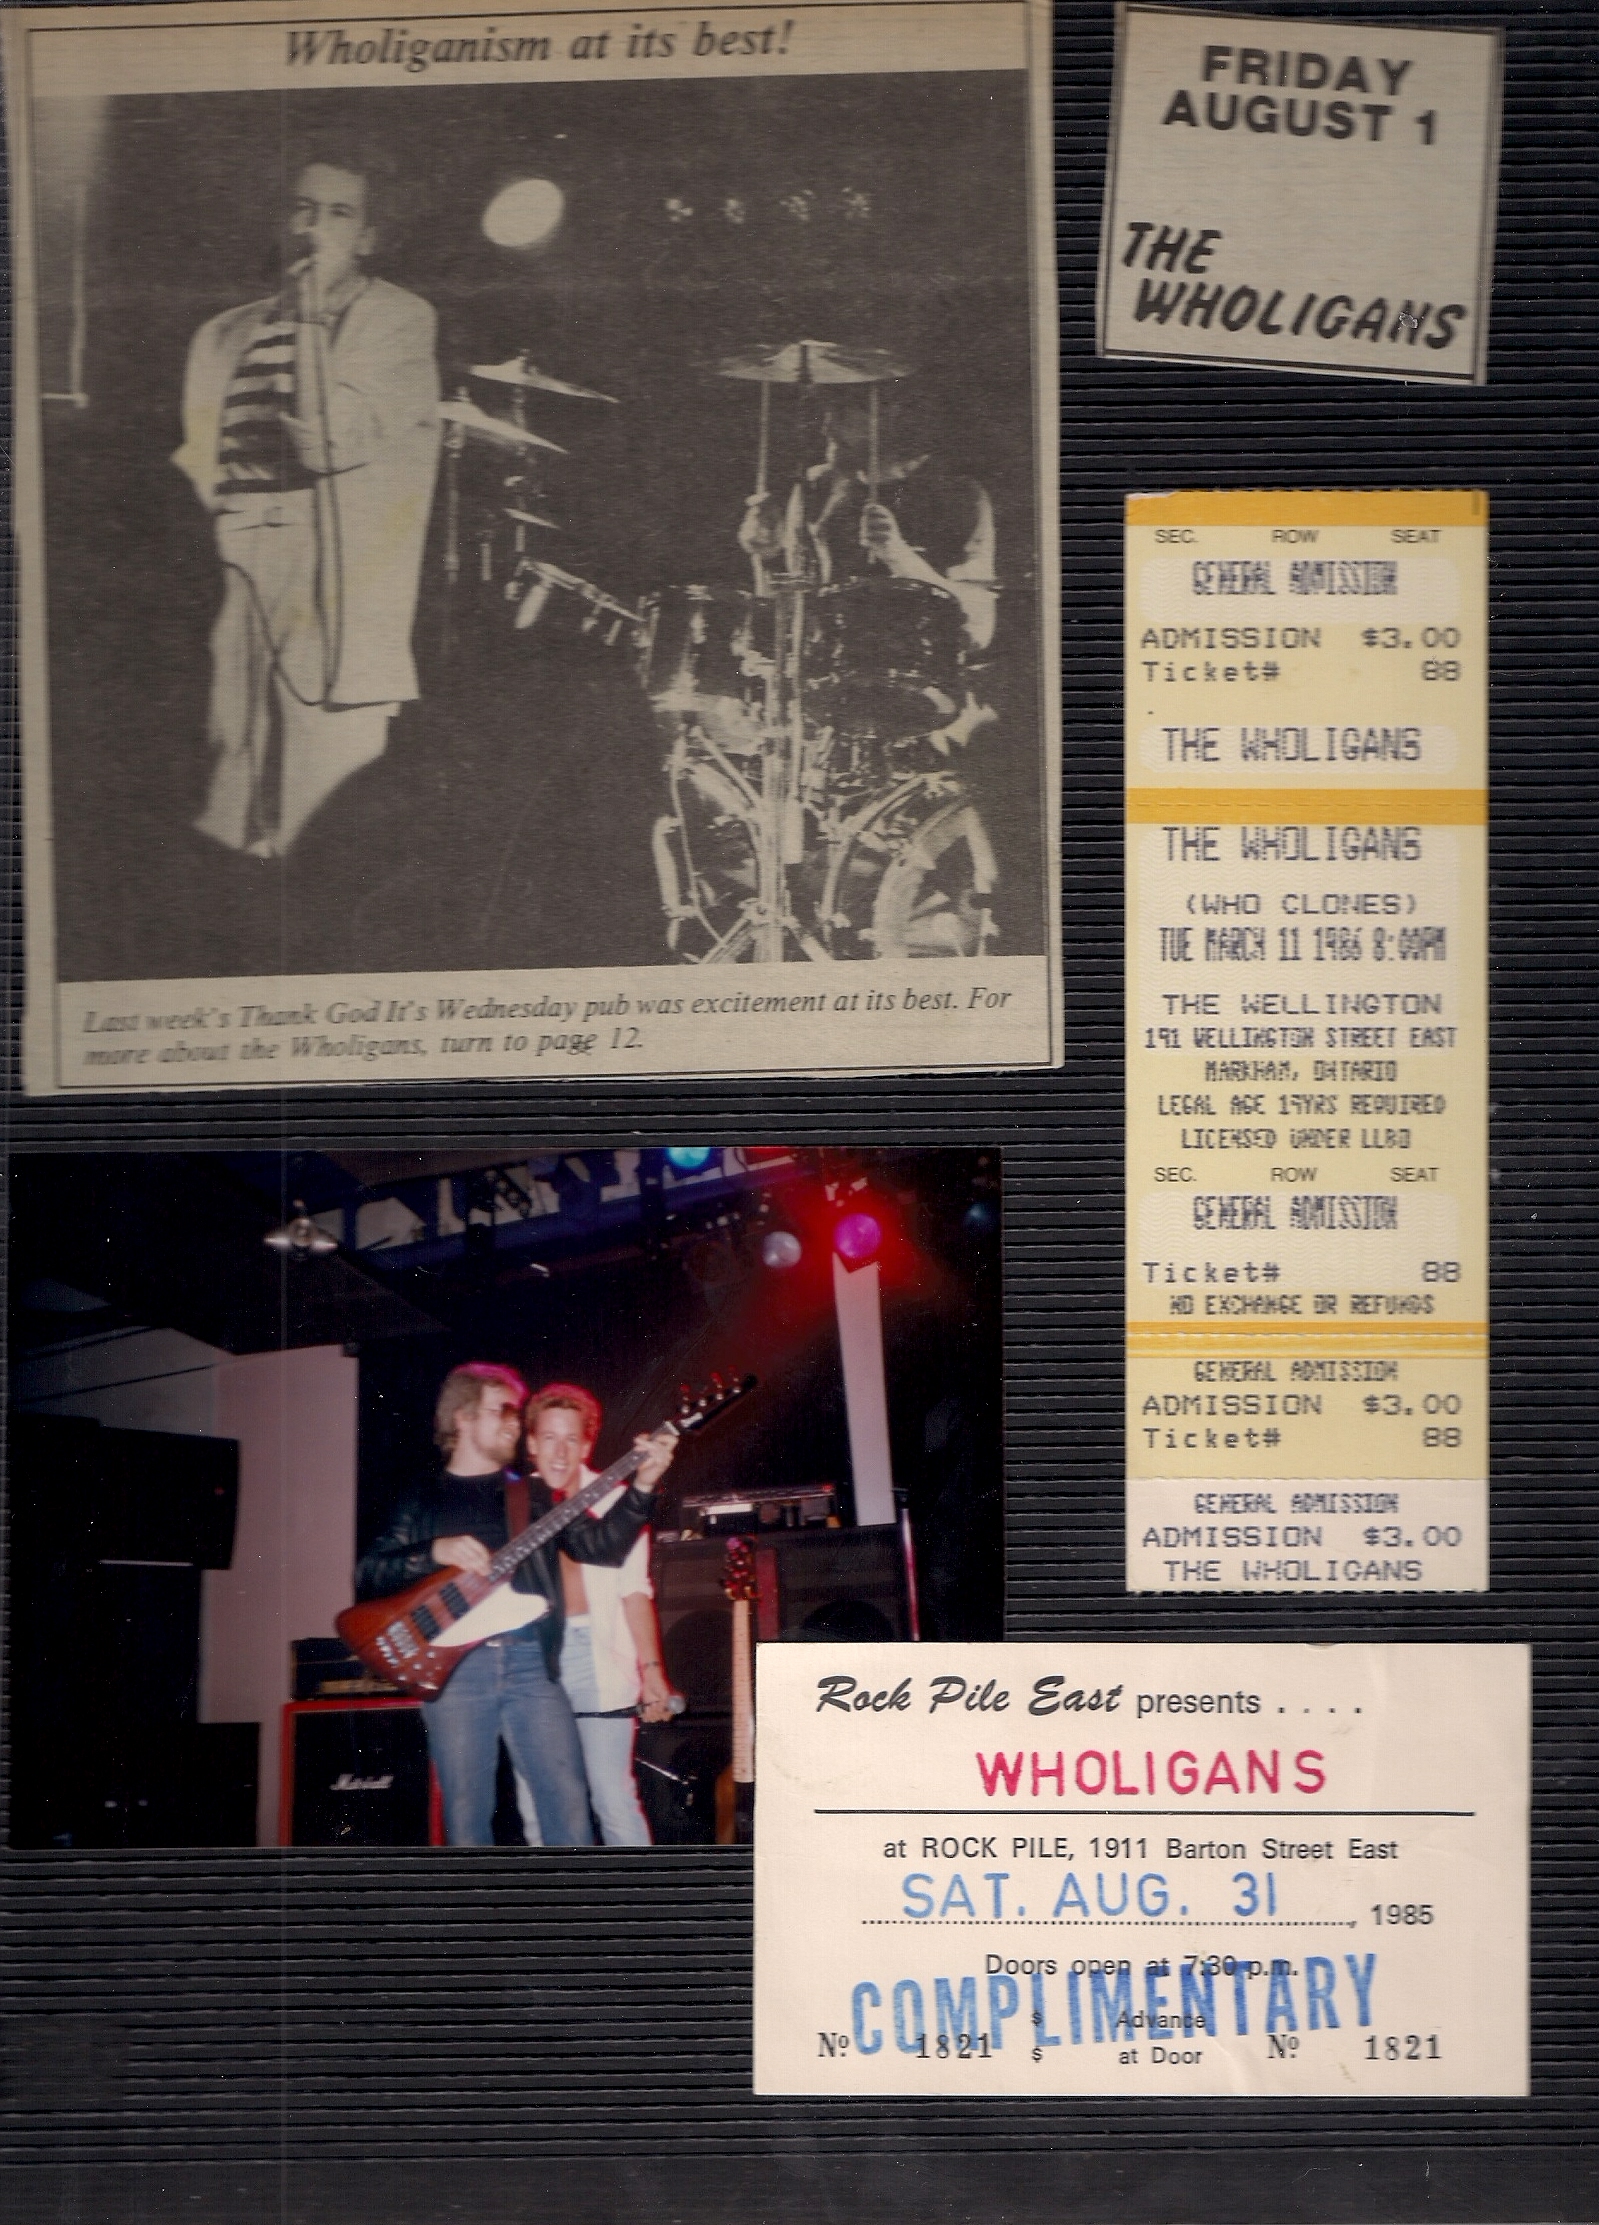 Wholigan Fan Club - The Who